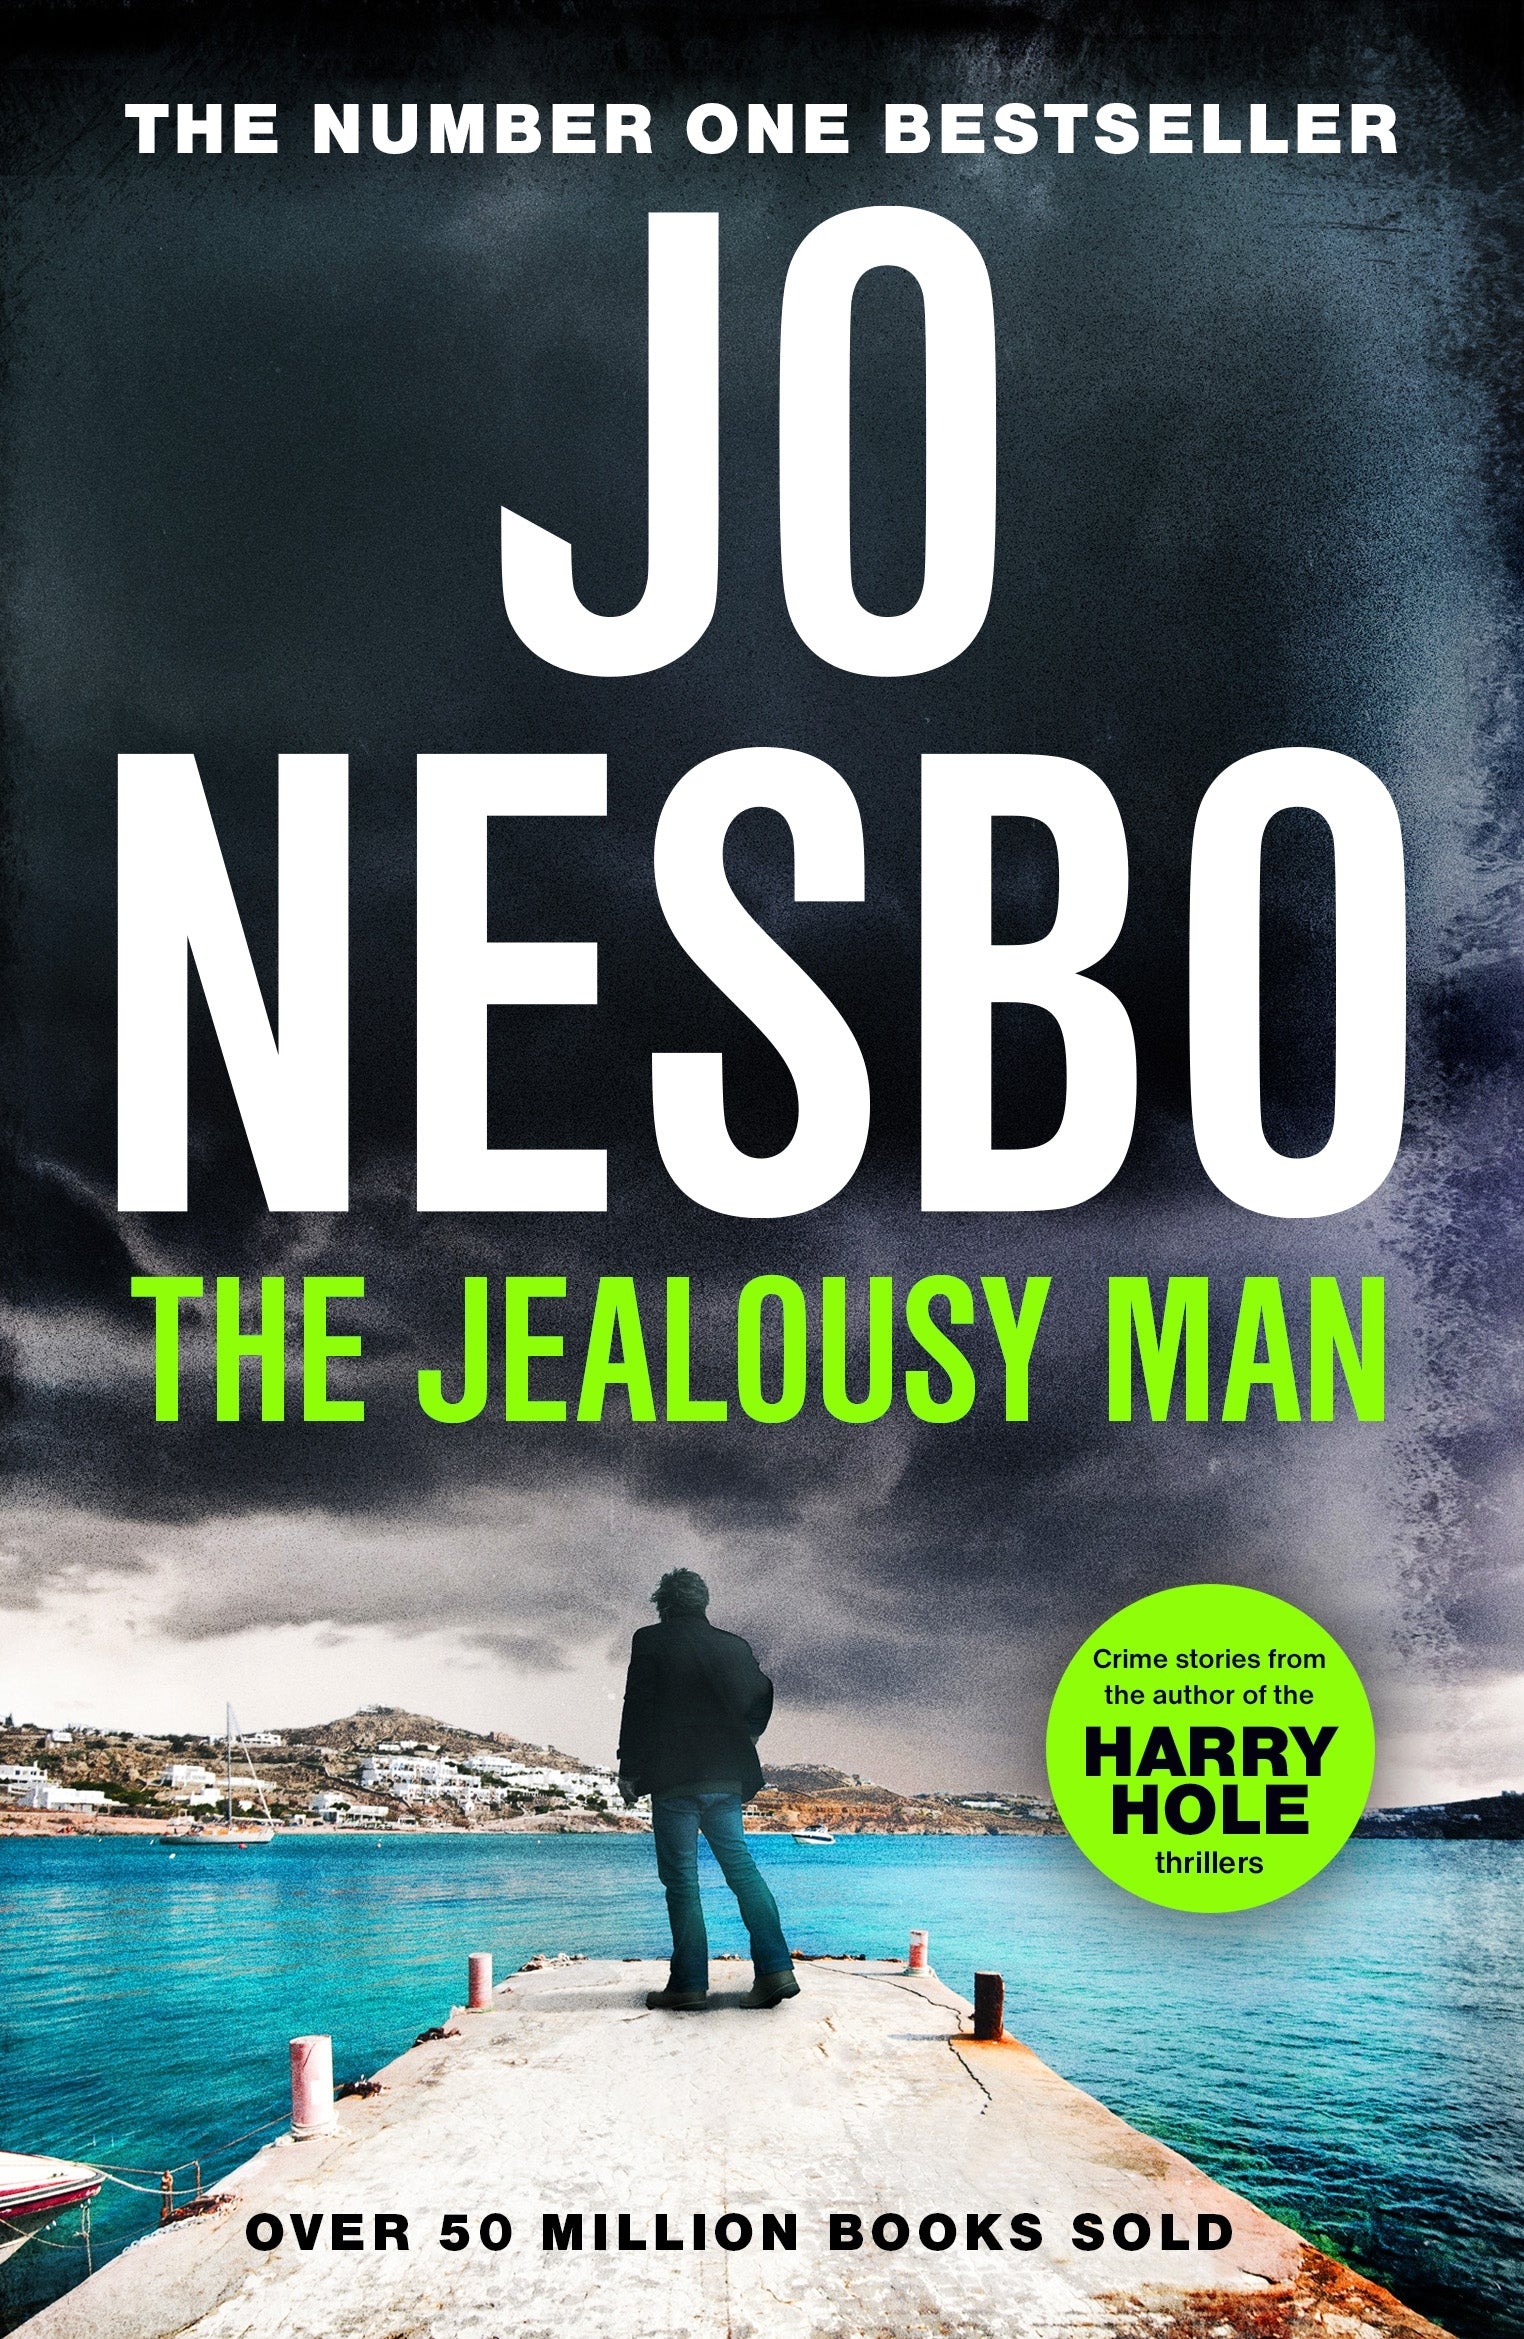 The Jealousy Man by Jo Nesbo